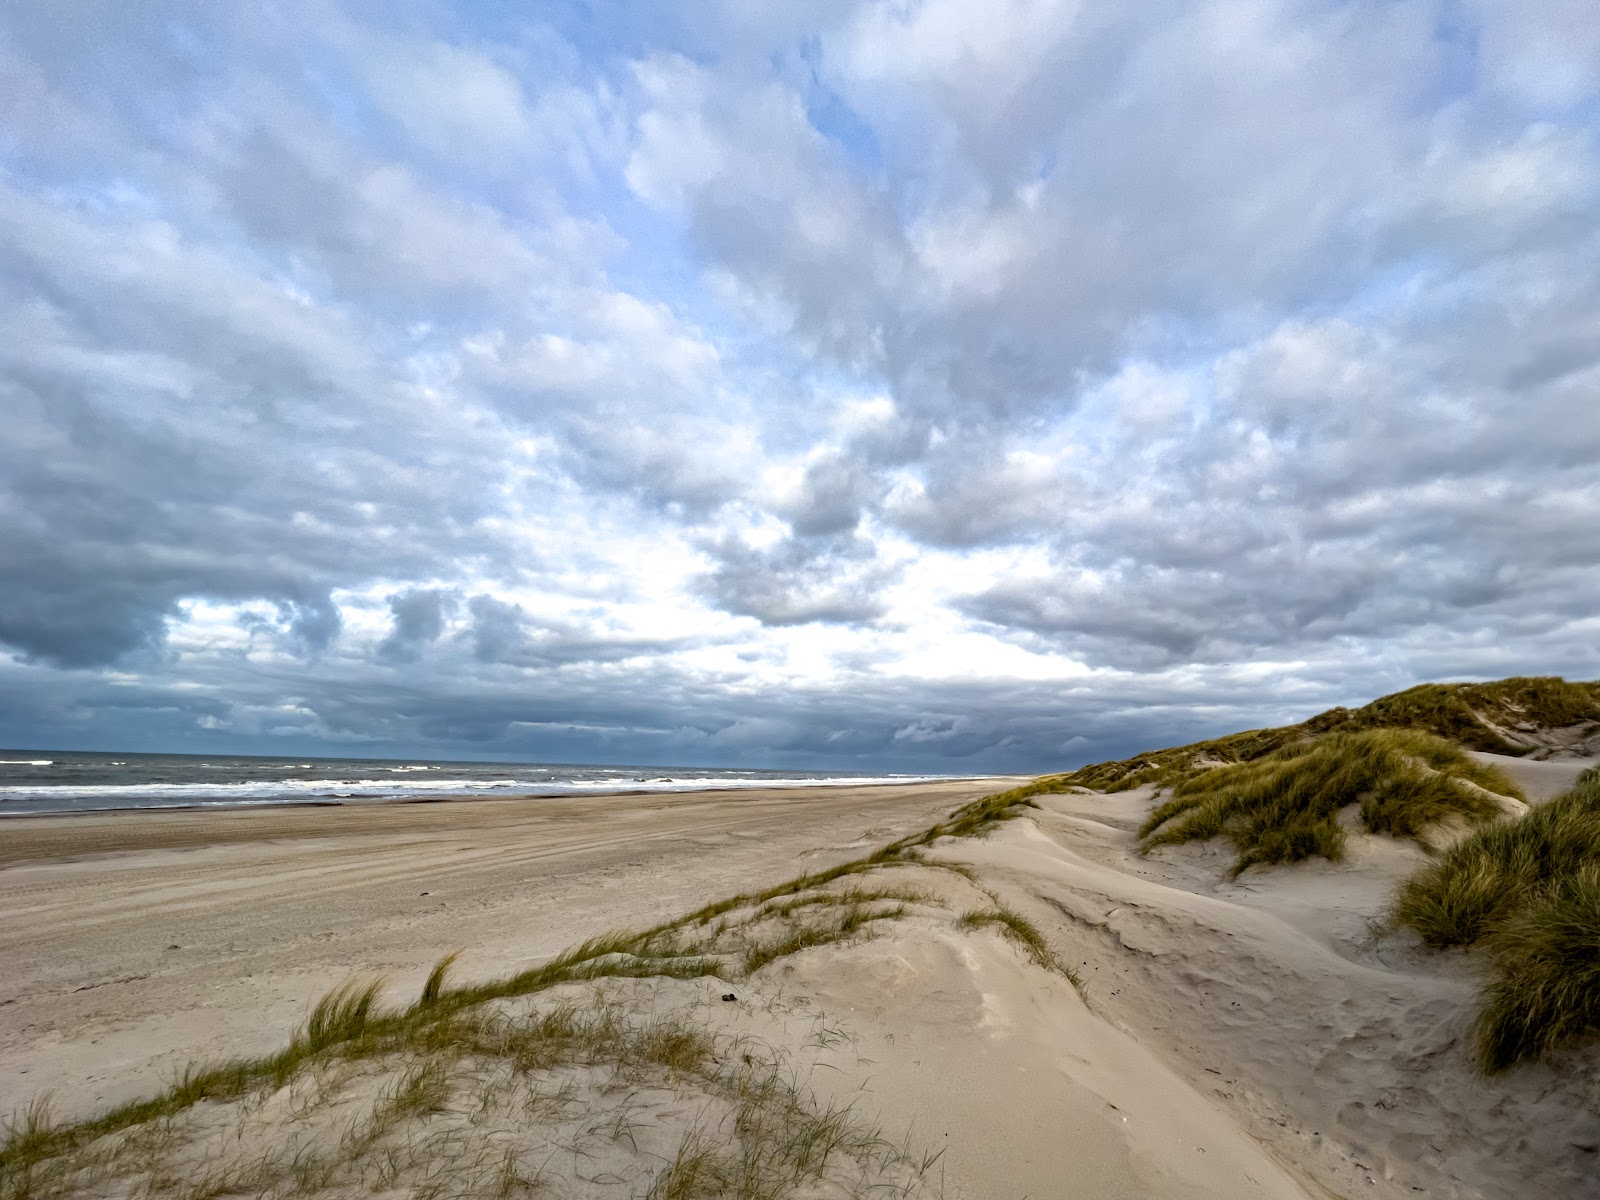 Foto av Houstrup strand med lång rak strand